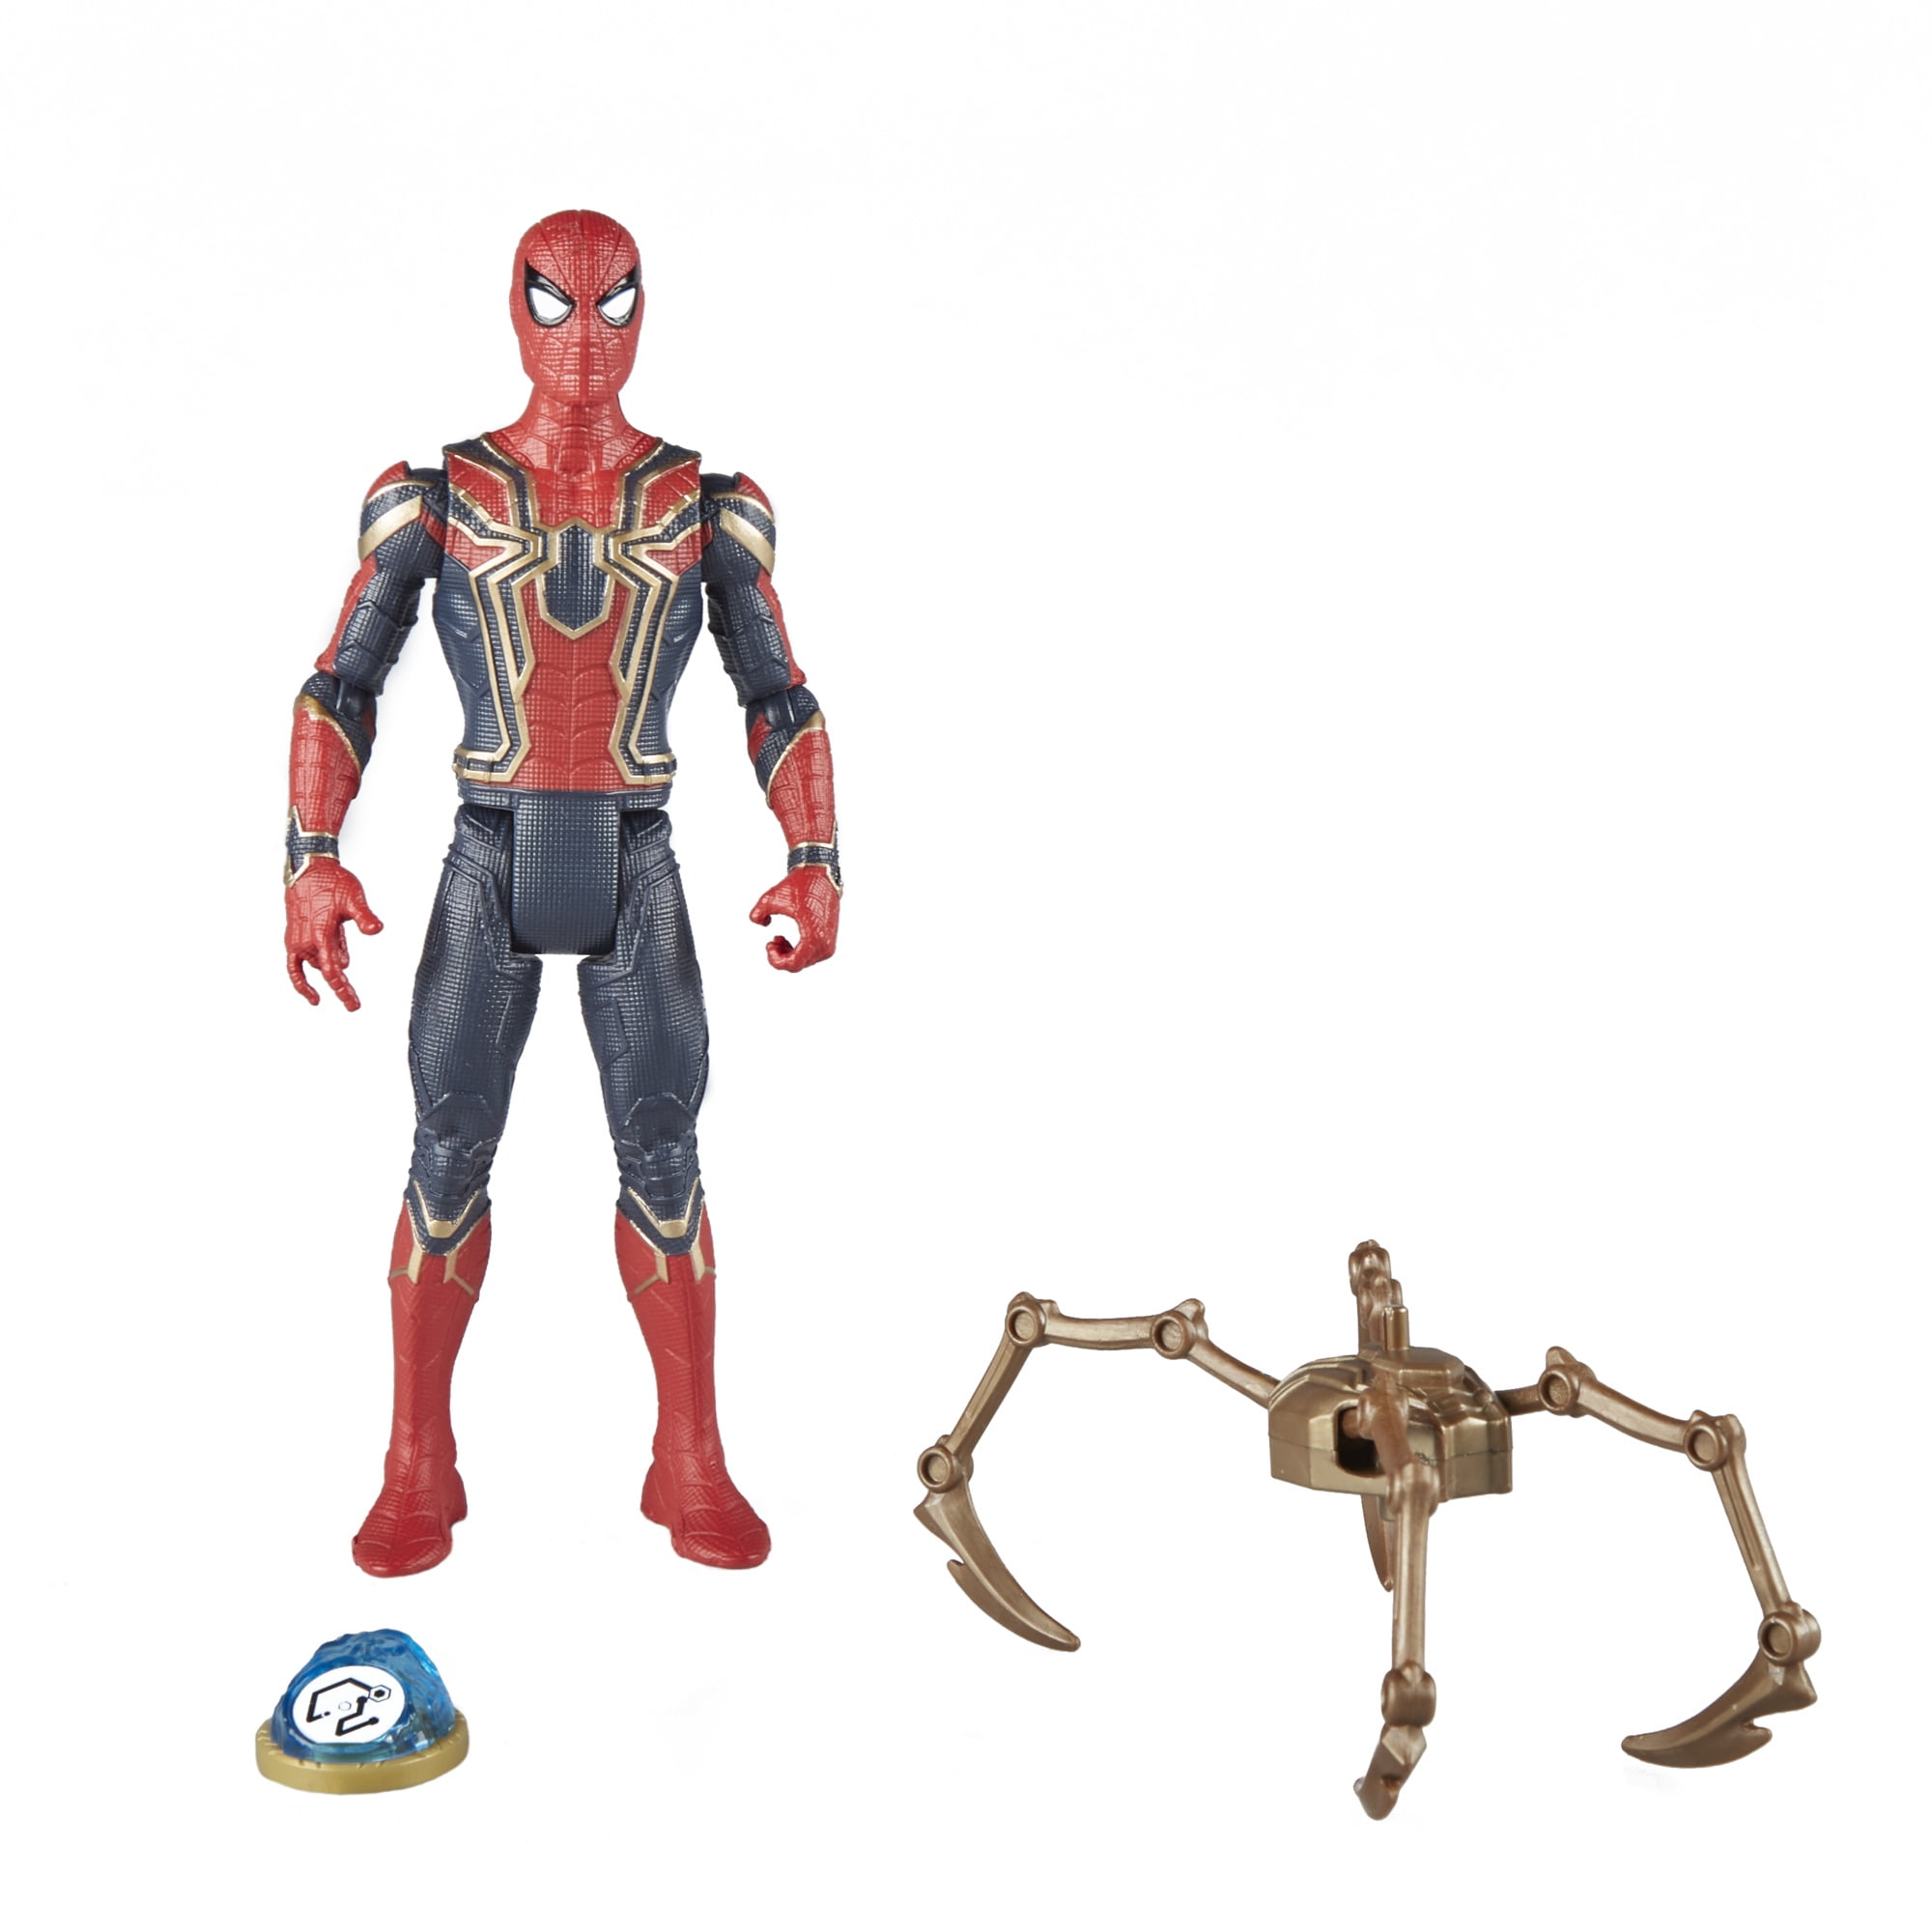 Marvel Avengers 3 Infinity War Iron Spiderman Spider-Man Action Figure Toy Gift 